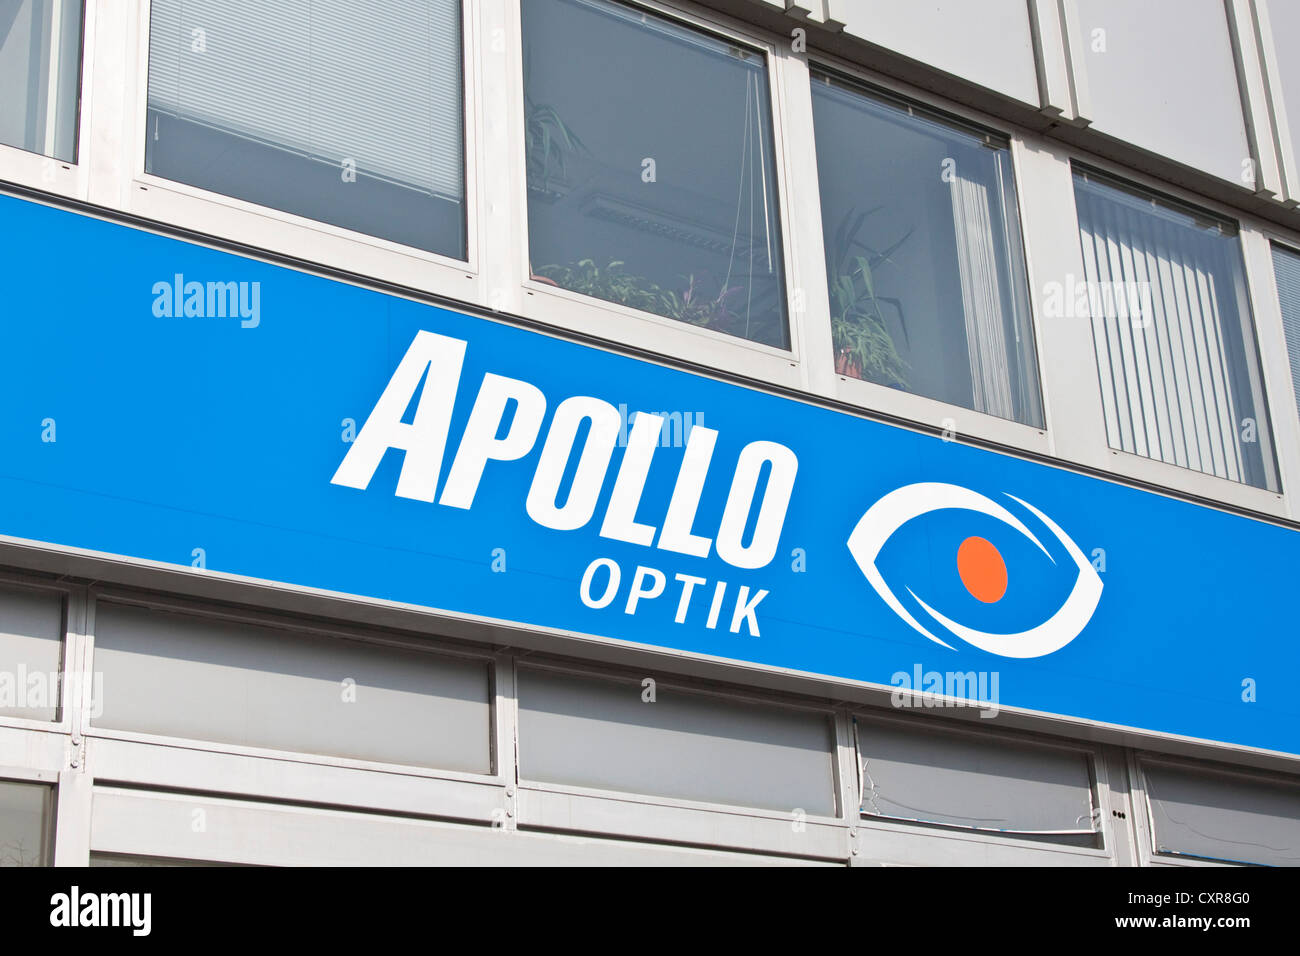 Apollo Optik, logo, signage, Germany, Europe Stock Photo